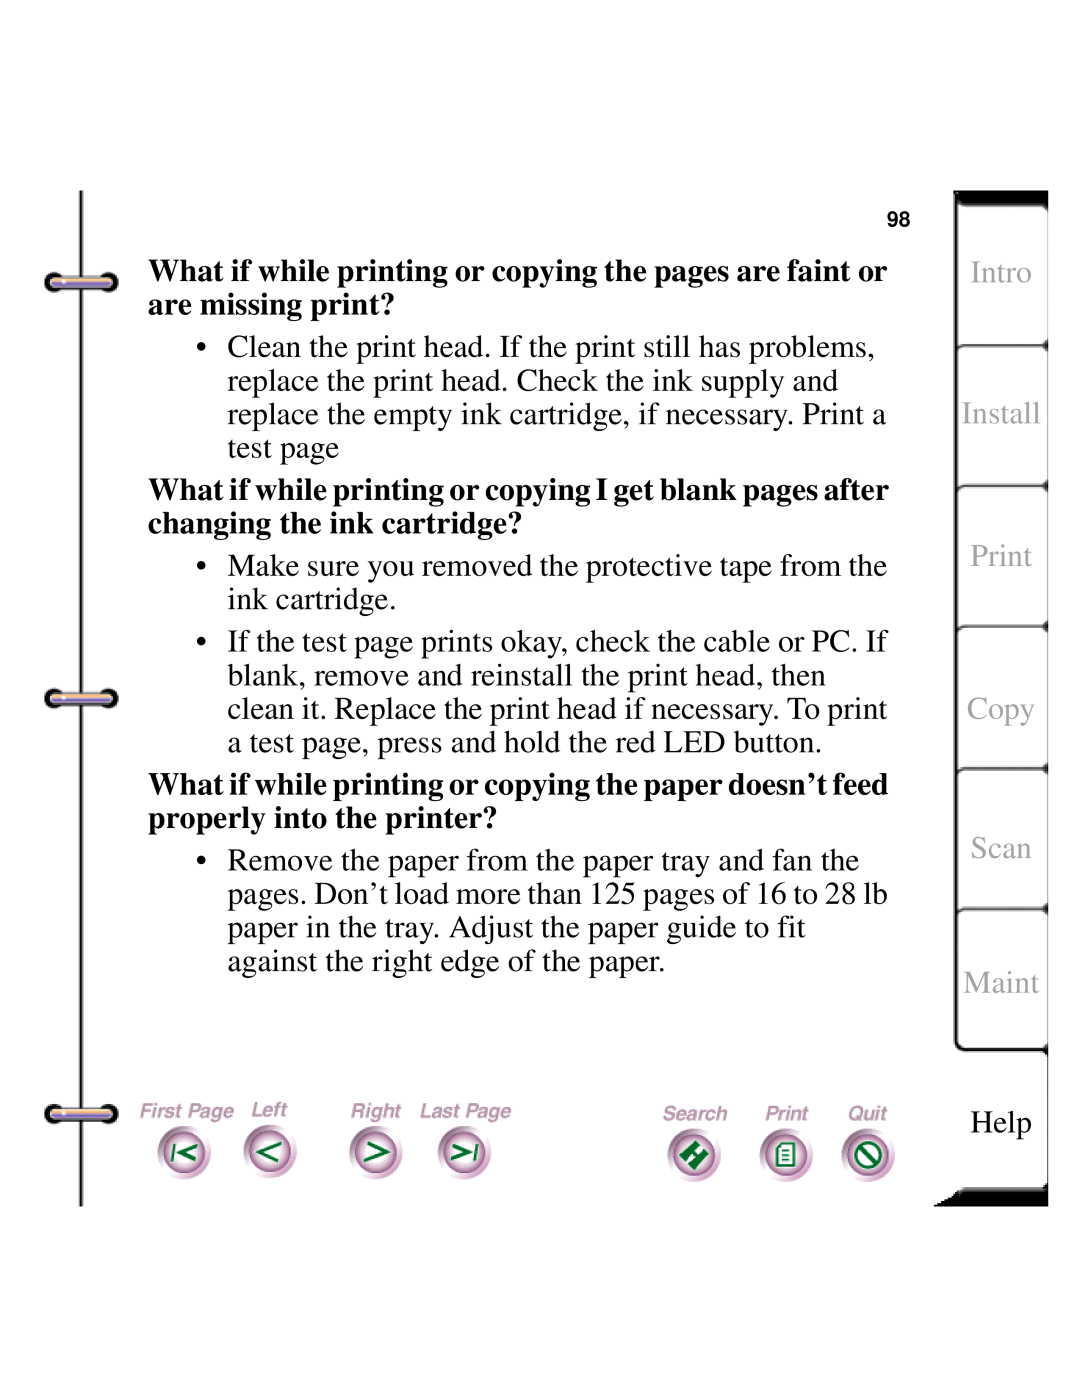 Xerox Document HomeCentre manual Intro Install Print Copy Scan Maint, Help 